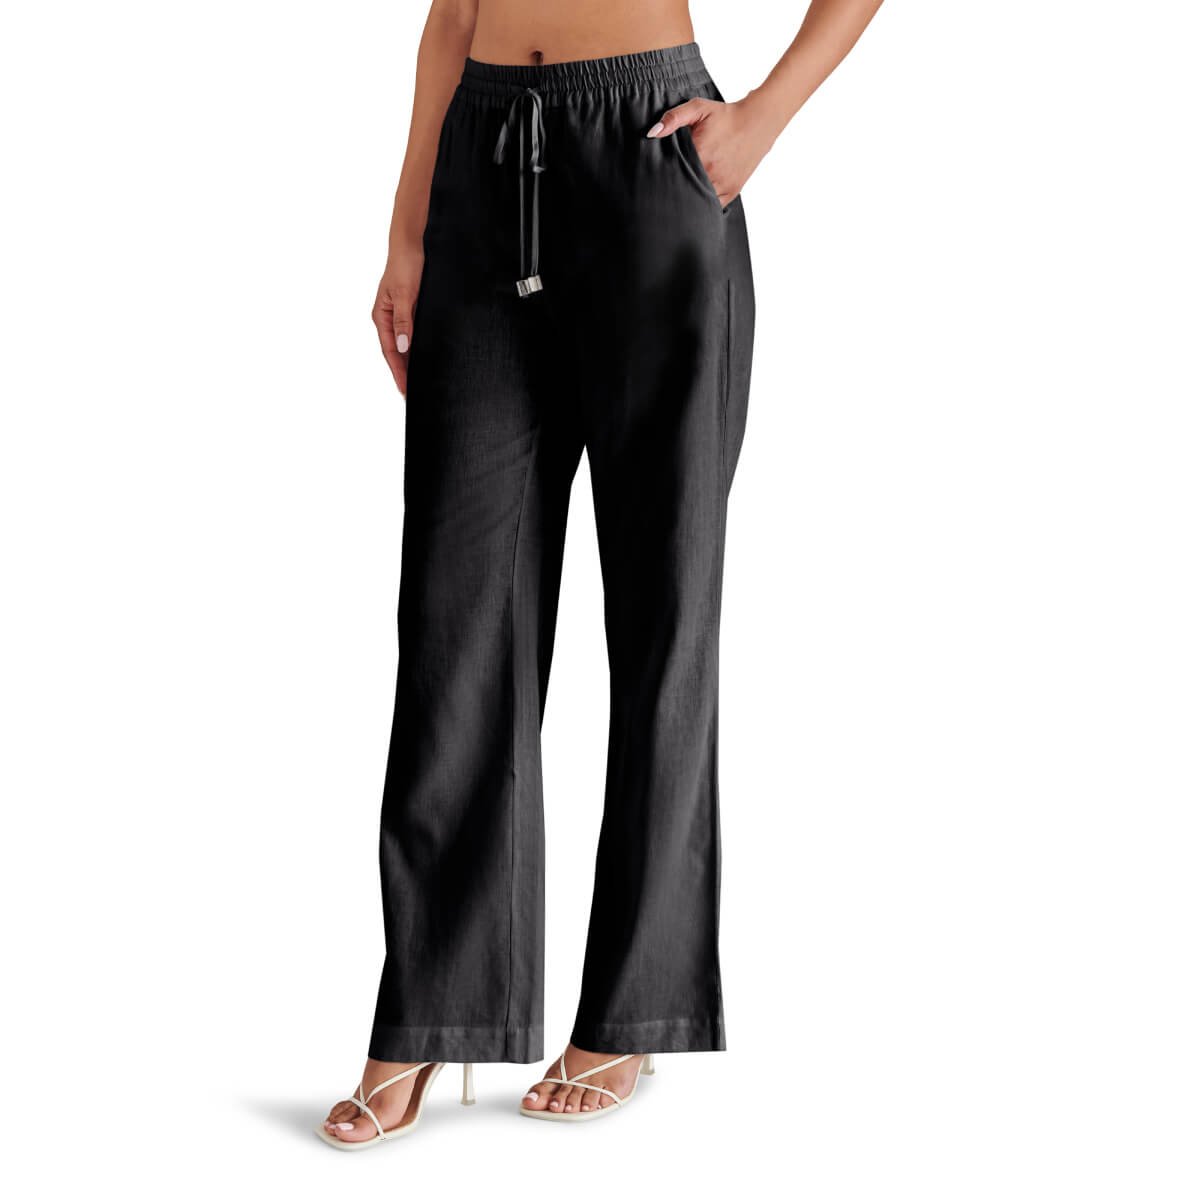 Steve Madden Venetia Drawstring Pants black front | MILK MONEY milkmoney.co | cute pants for women. cute trendy pants.